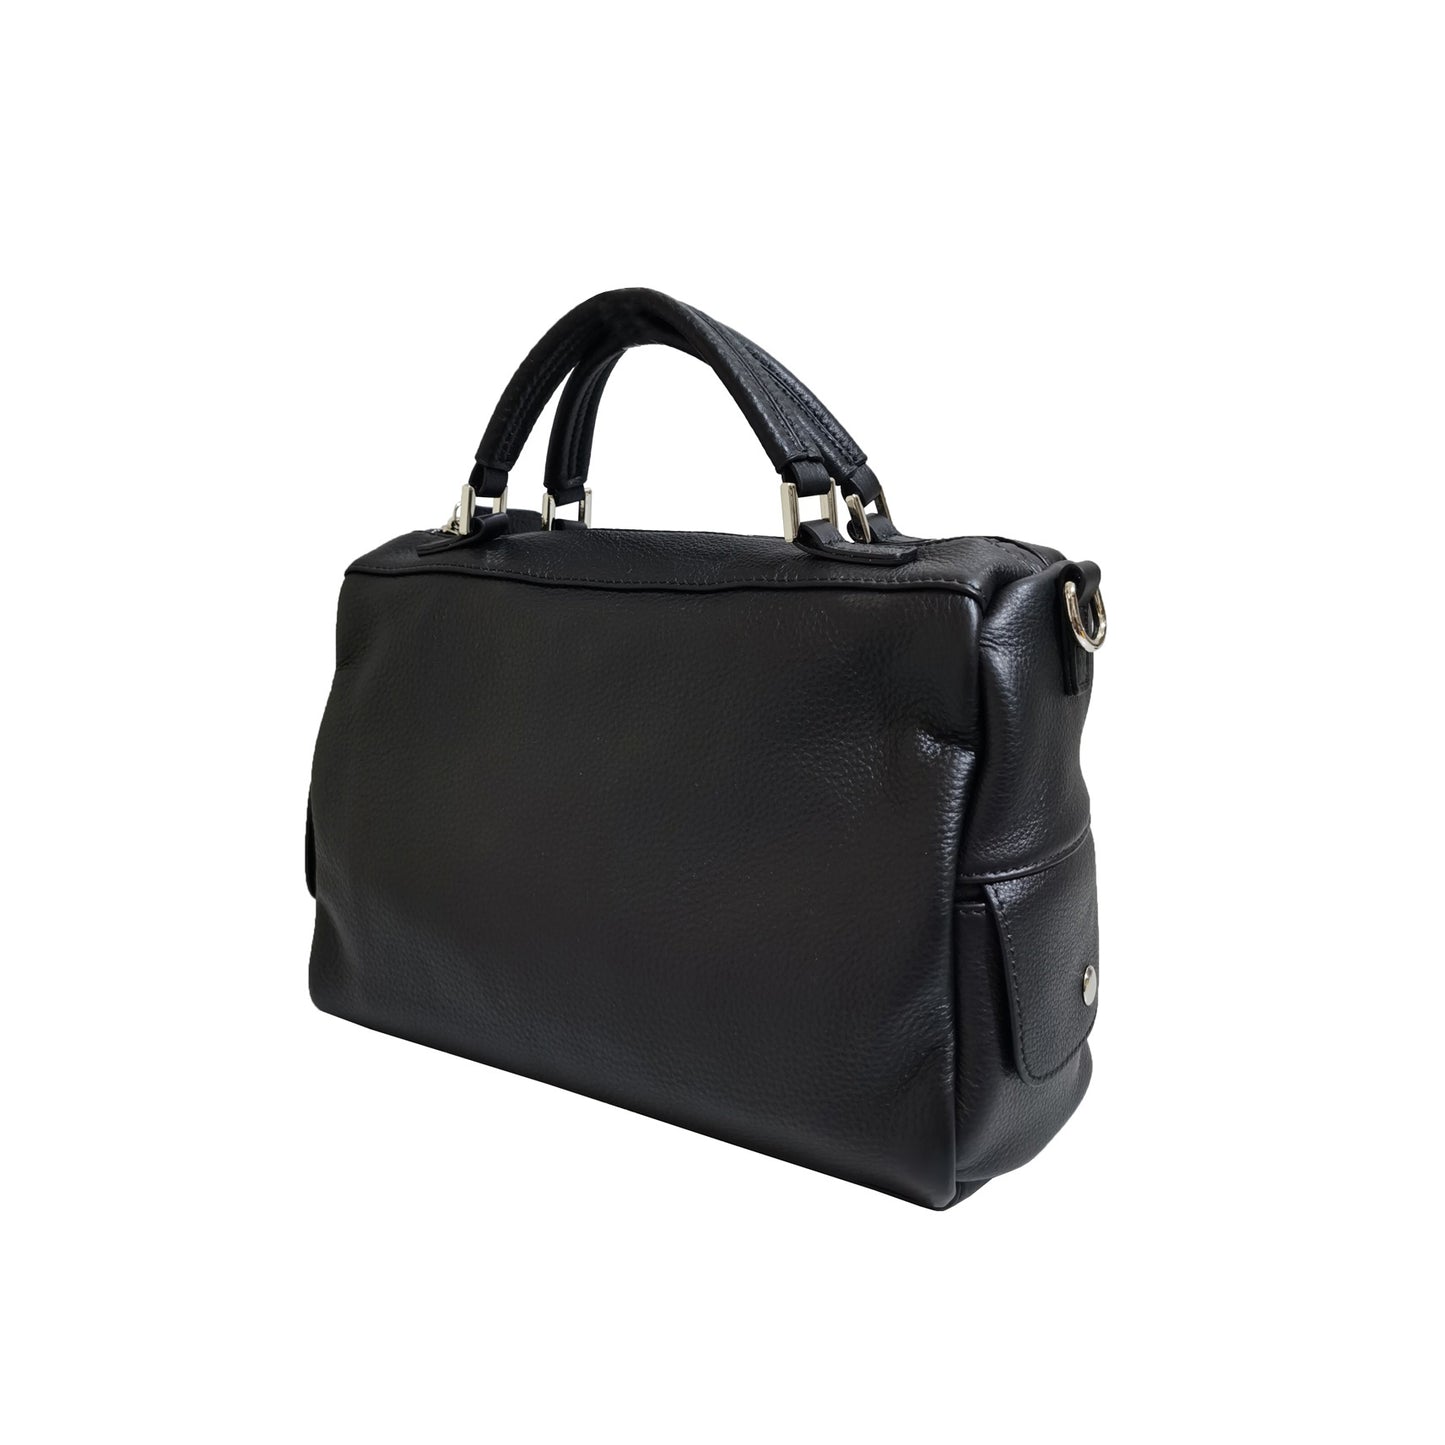 Women's genuine cowhide leather handbag Kabelky v3 design with 2 straps